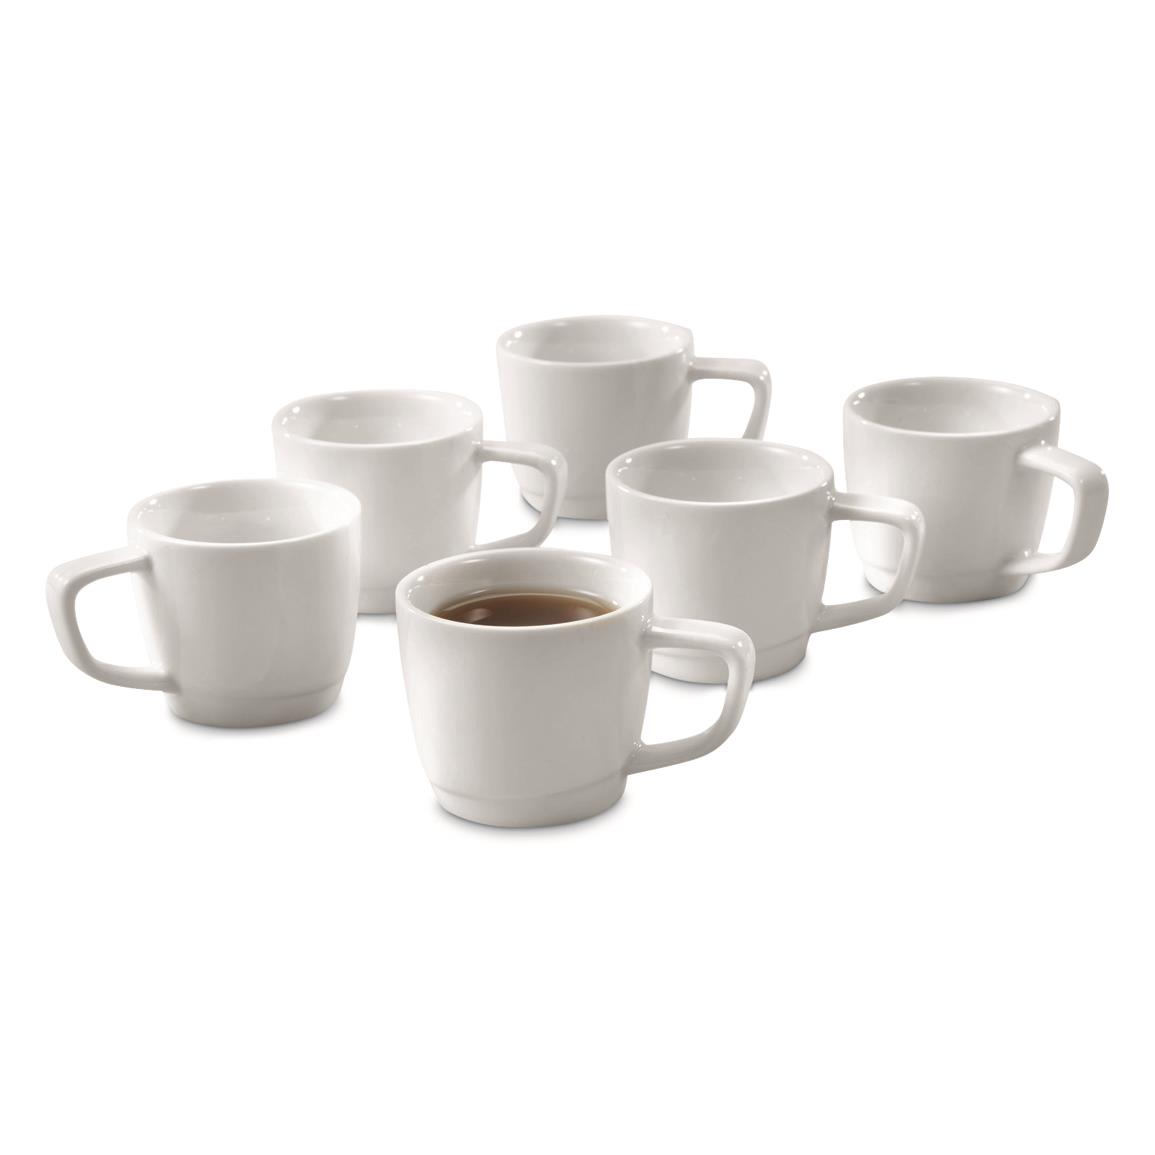 U.S. Aviation American Airlines Surplus Ceramic Espresso Cups, 6 Pack, New